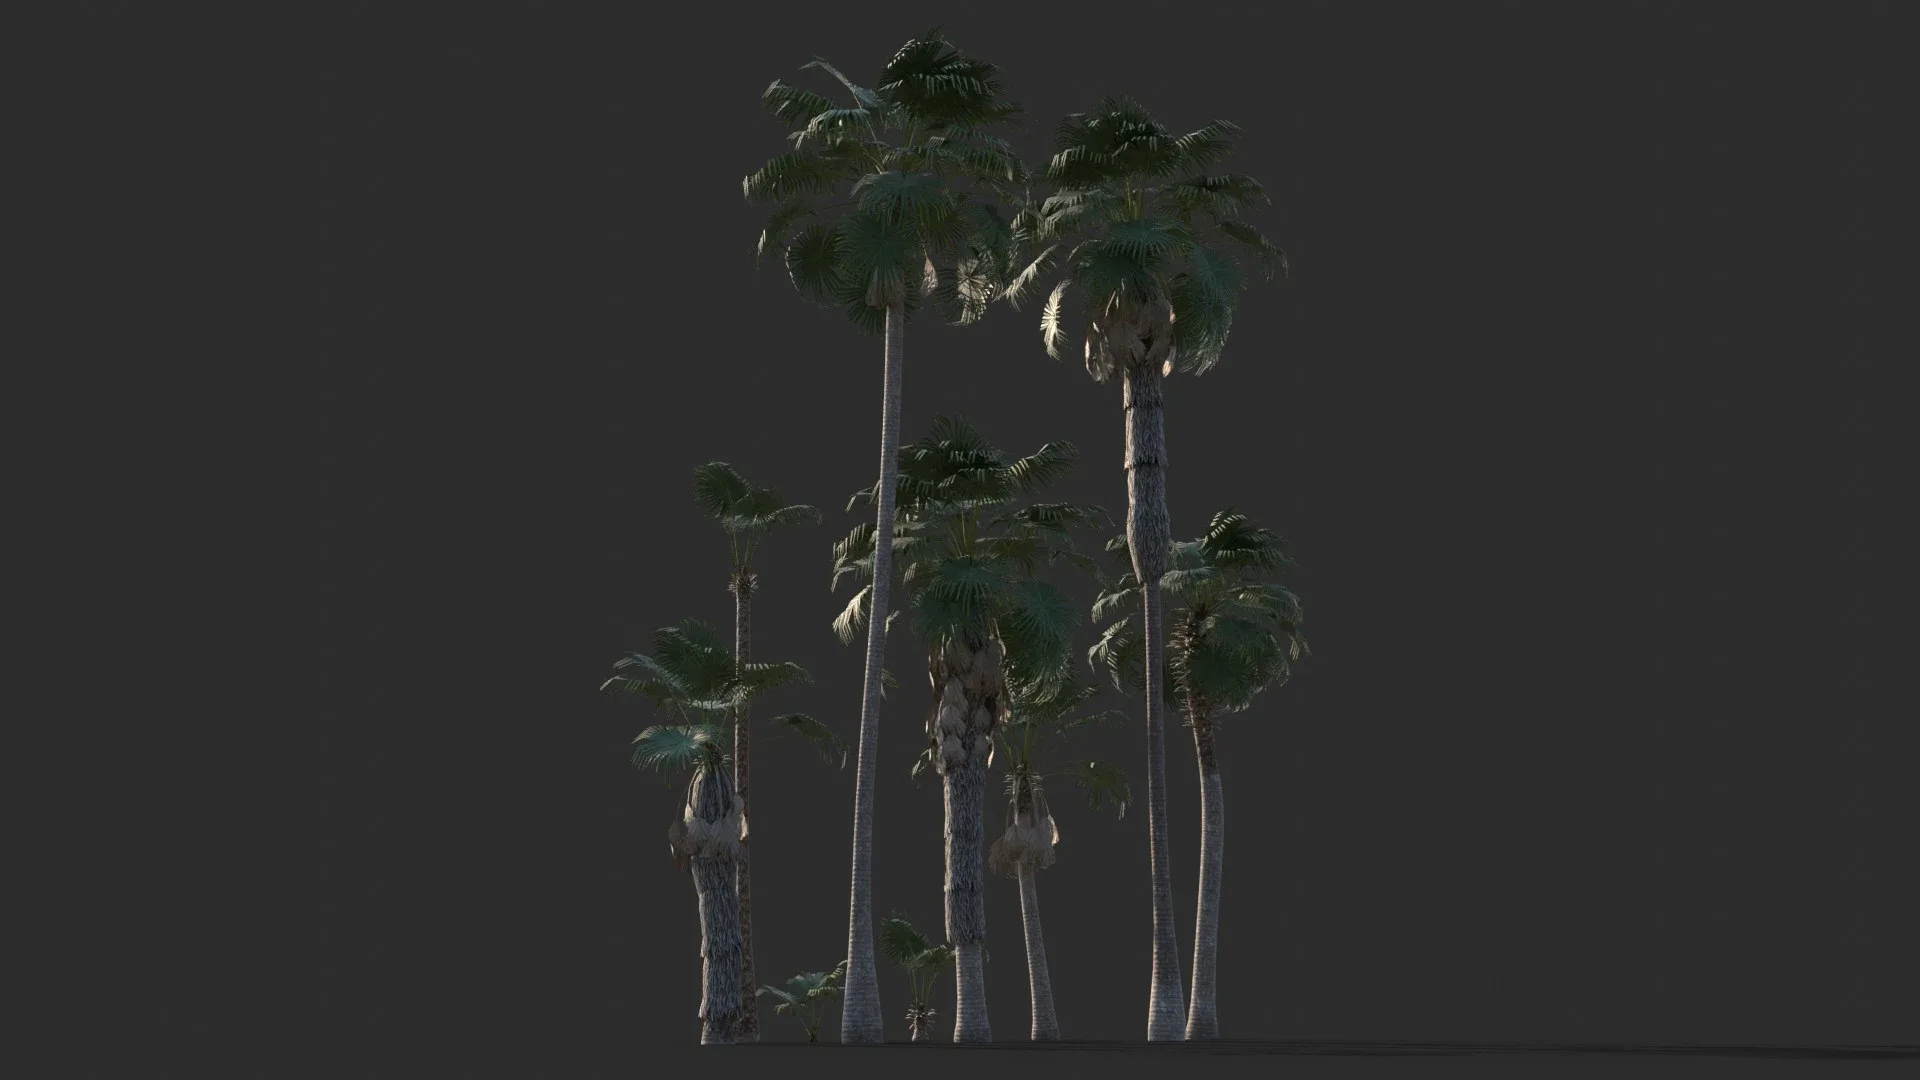 Modular Mexican Fan Palm Tree - Washingtonia Robusta